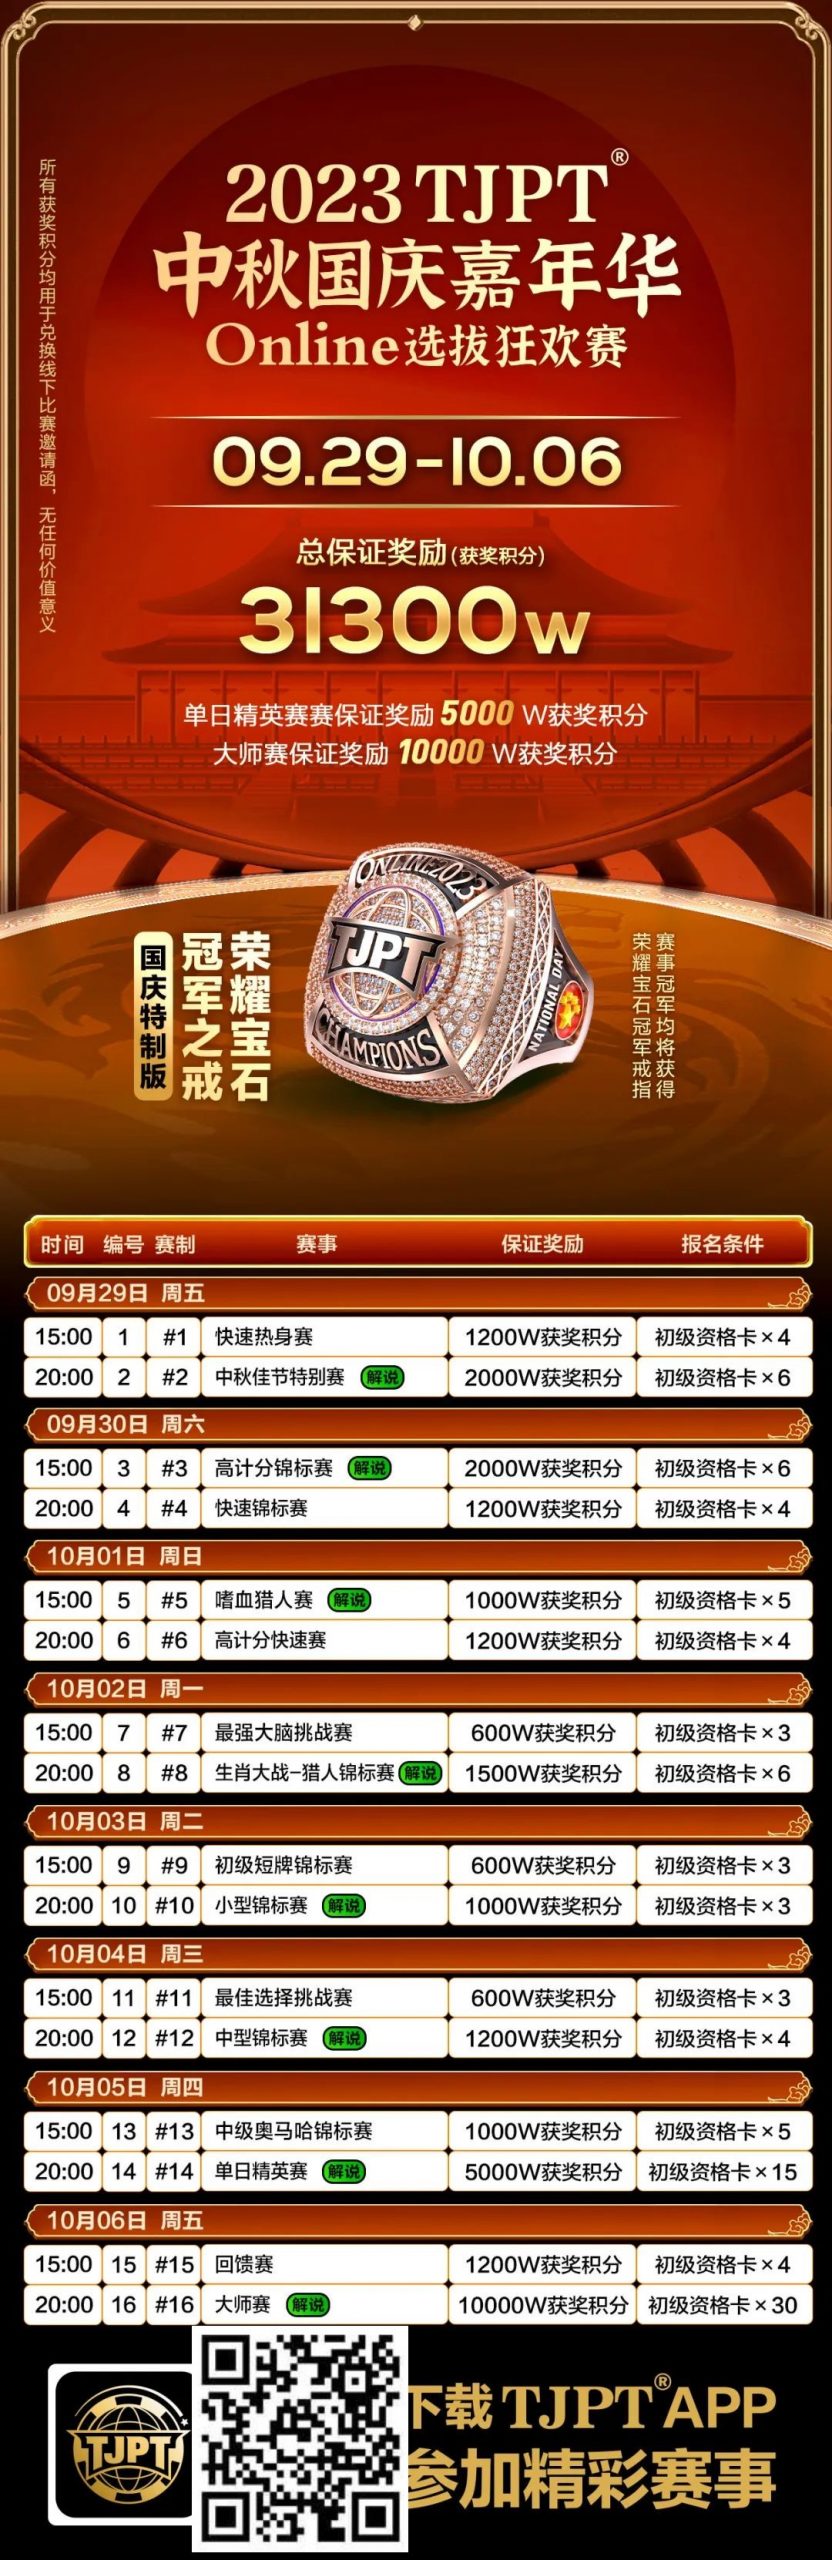 【EV 扑克】在线选拔丨 2023TJPT®中秋国庆嘉年华线上选拔狂欢赛将于 9 月 29 日至 10 月 6 日正式开启！